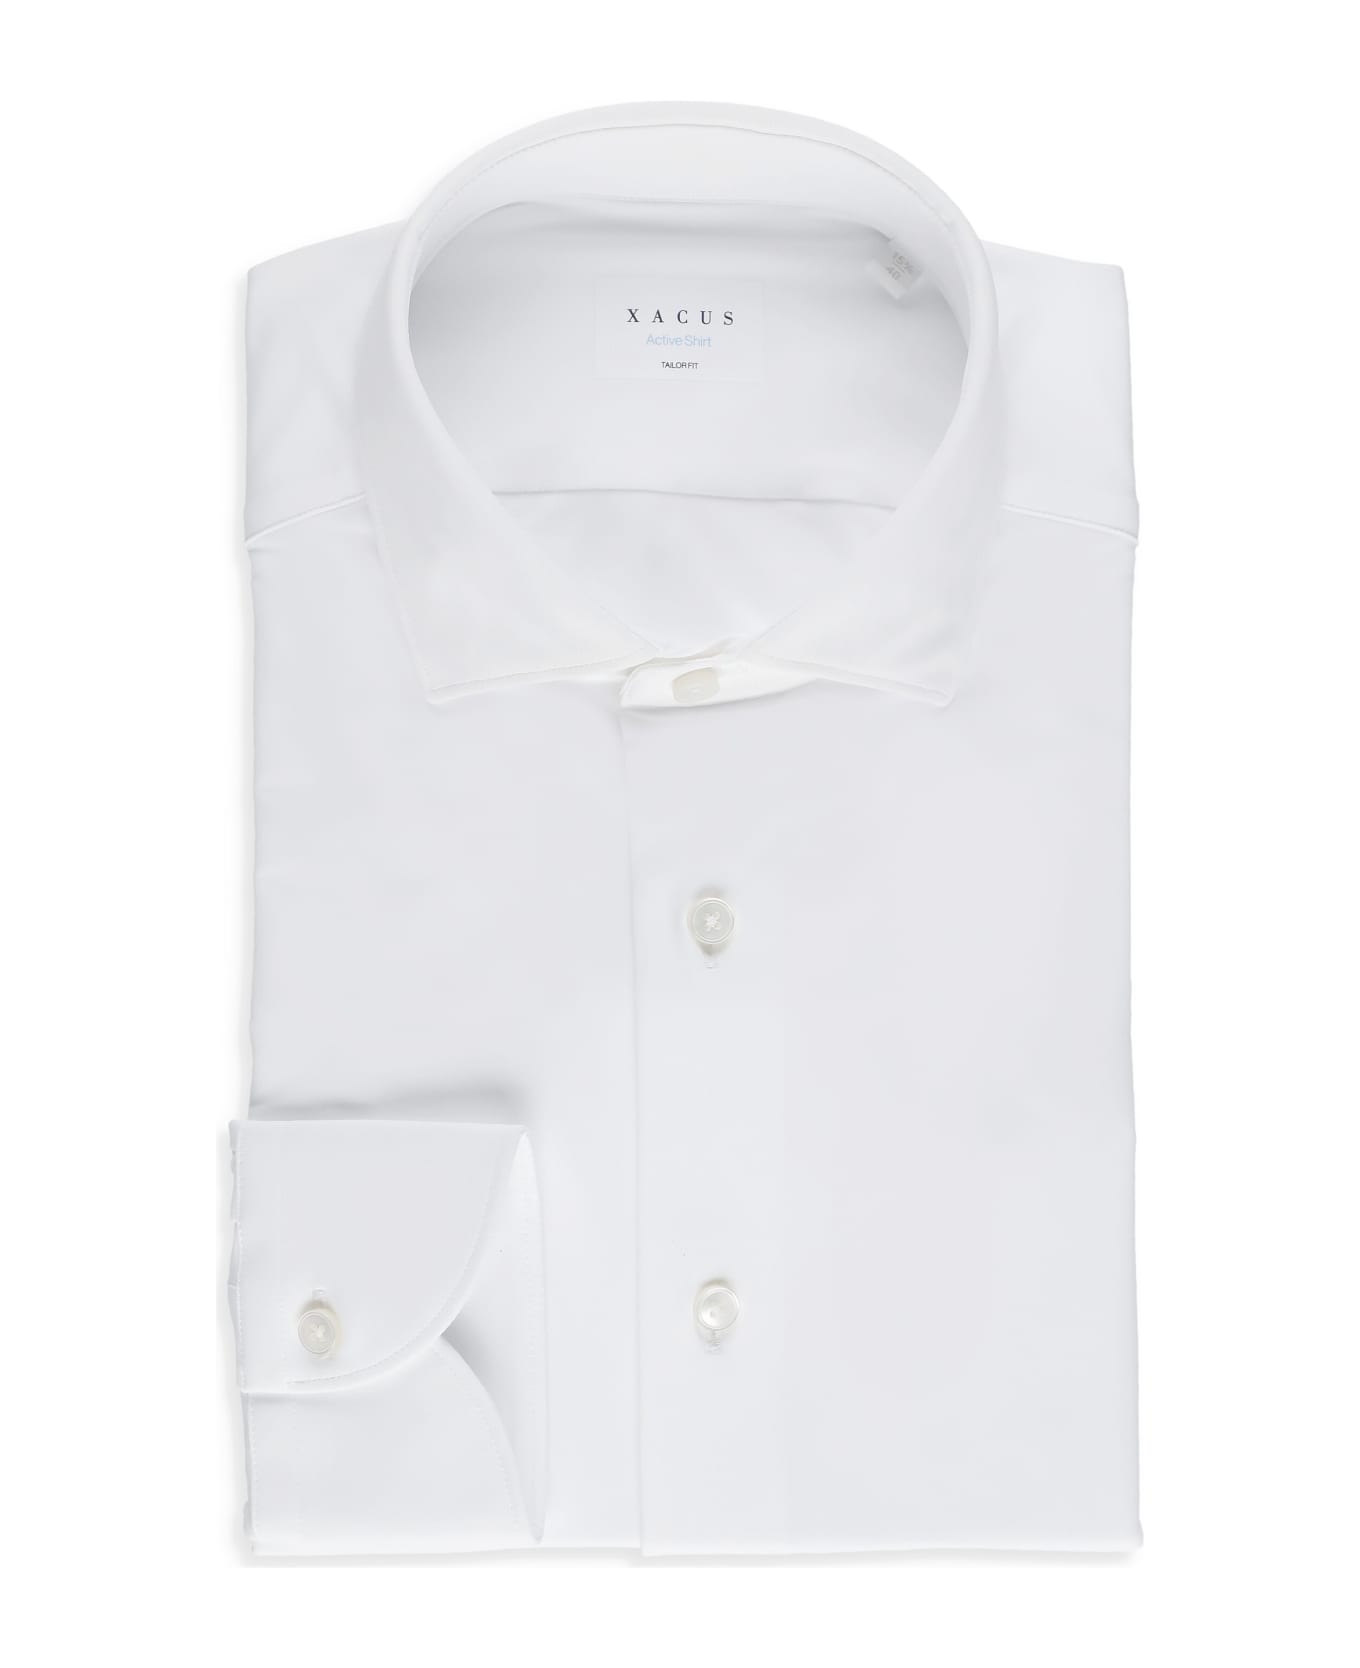 Xacus Active Shirt - White シャツ